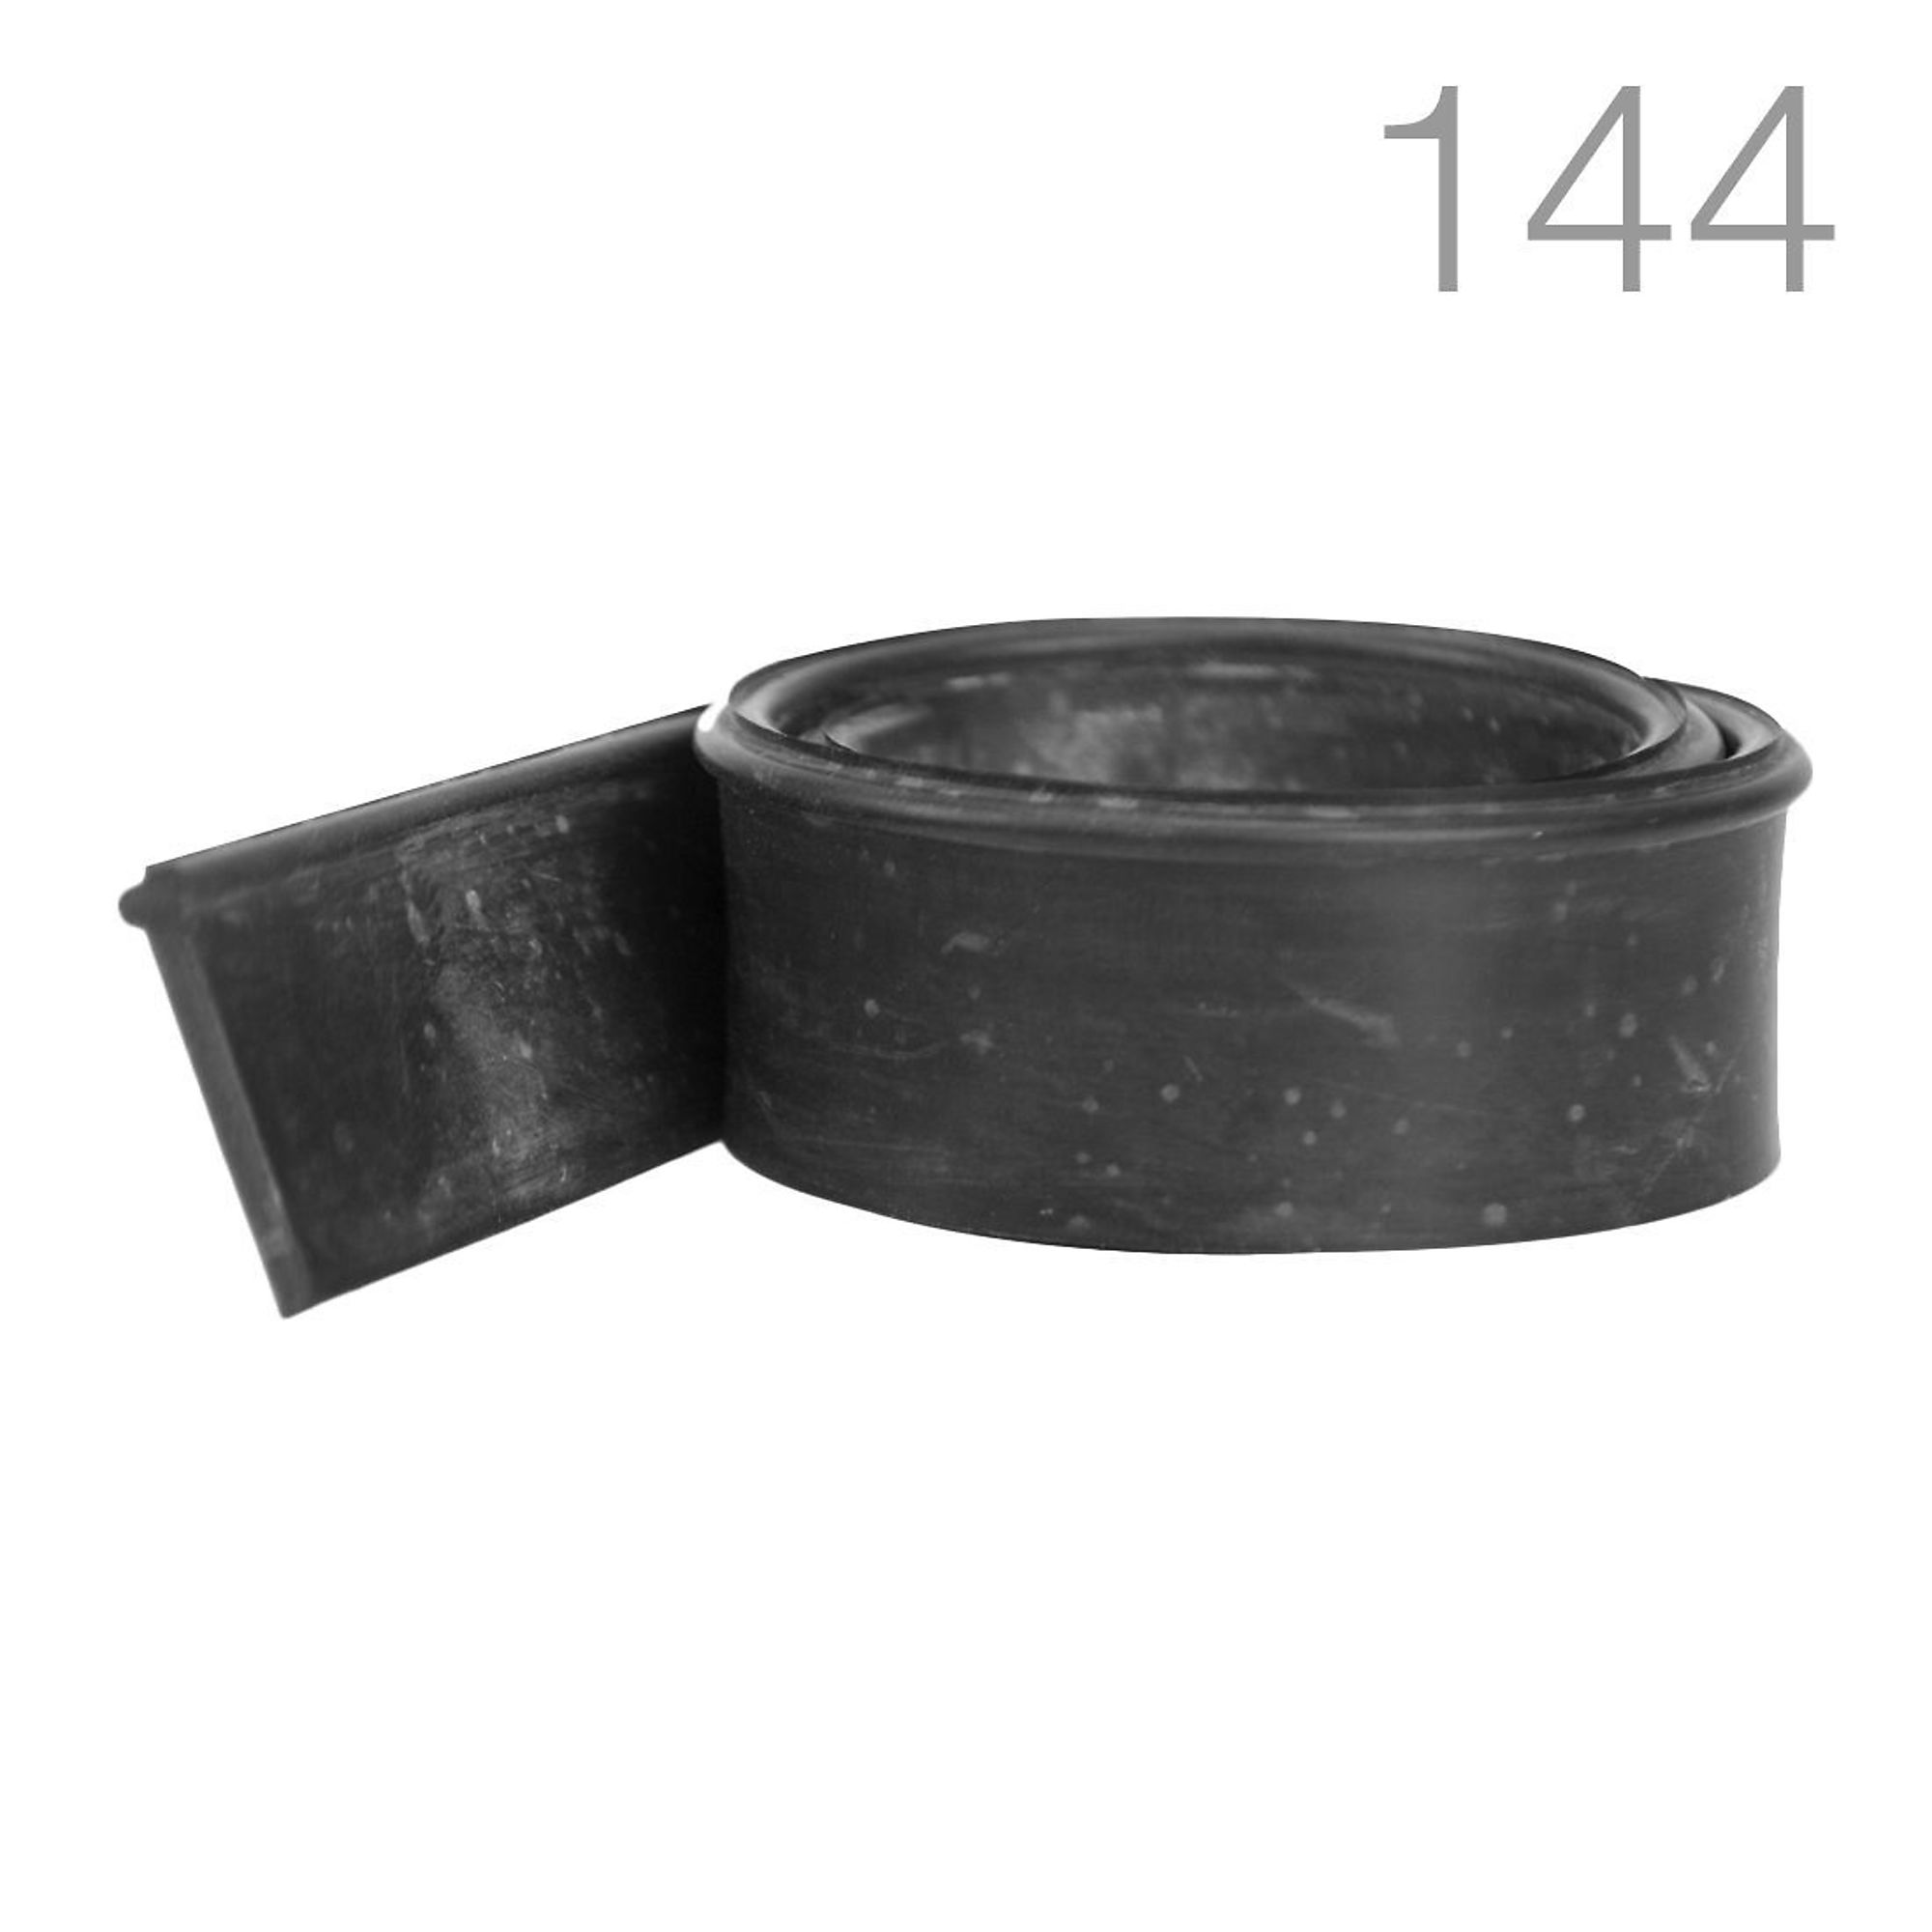 BlackDiamond, Flat Top Medium Squeegee Rubber Gross - 12Inch, Model 012-05-56